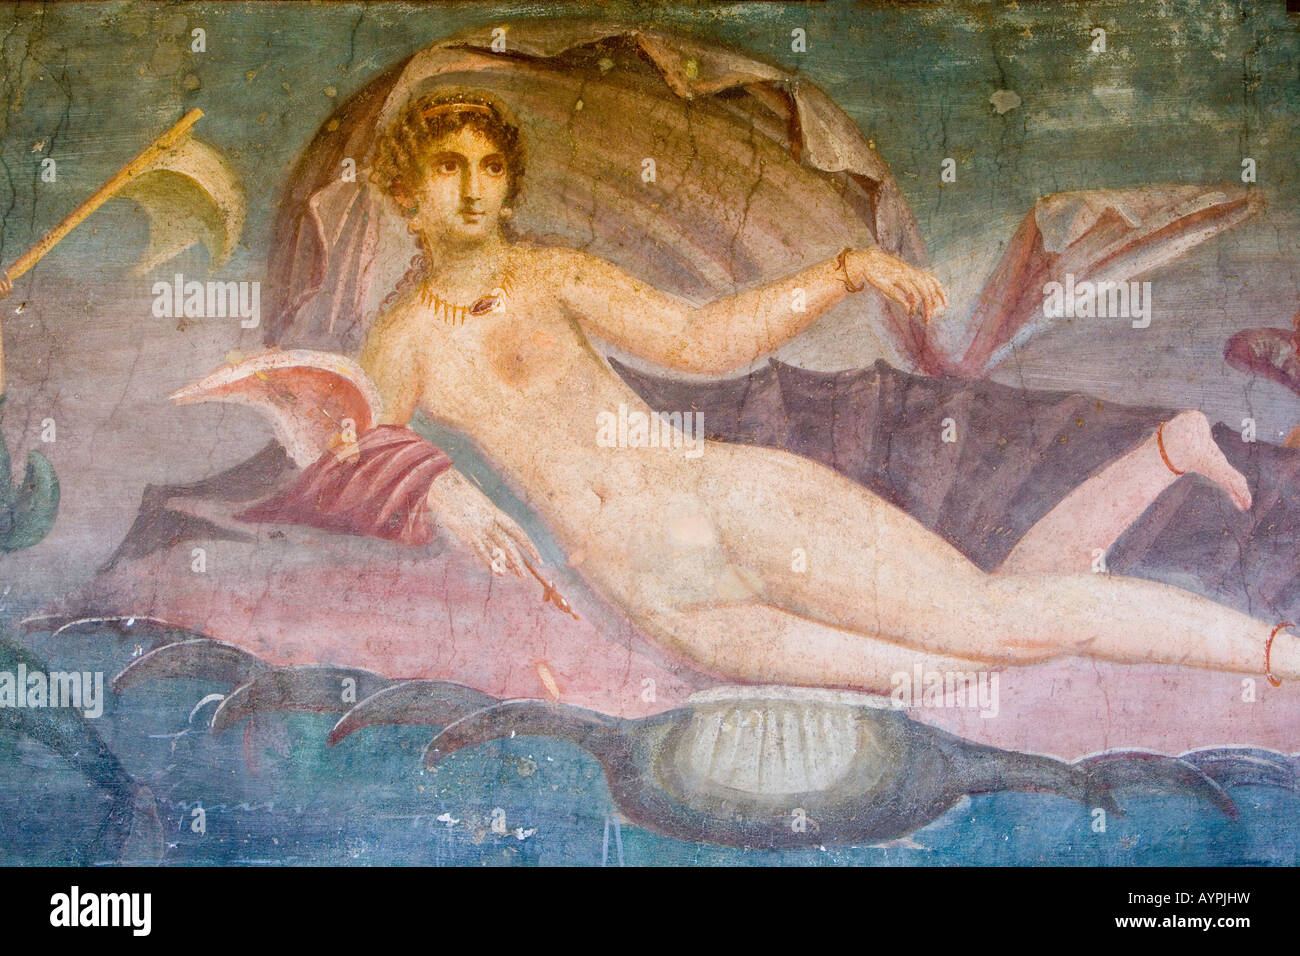 Painting of Venus, House of Venus, Pompeii archaeological site, Pompeii, Italy Stock Photo